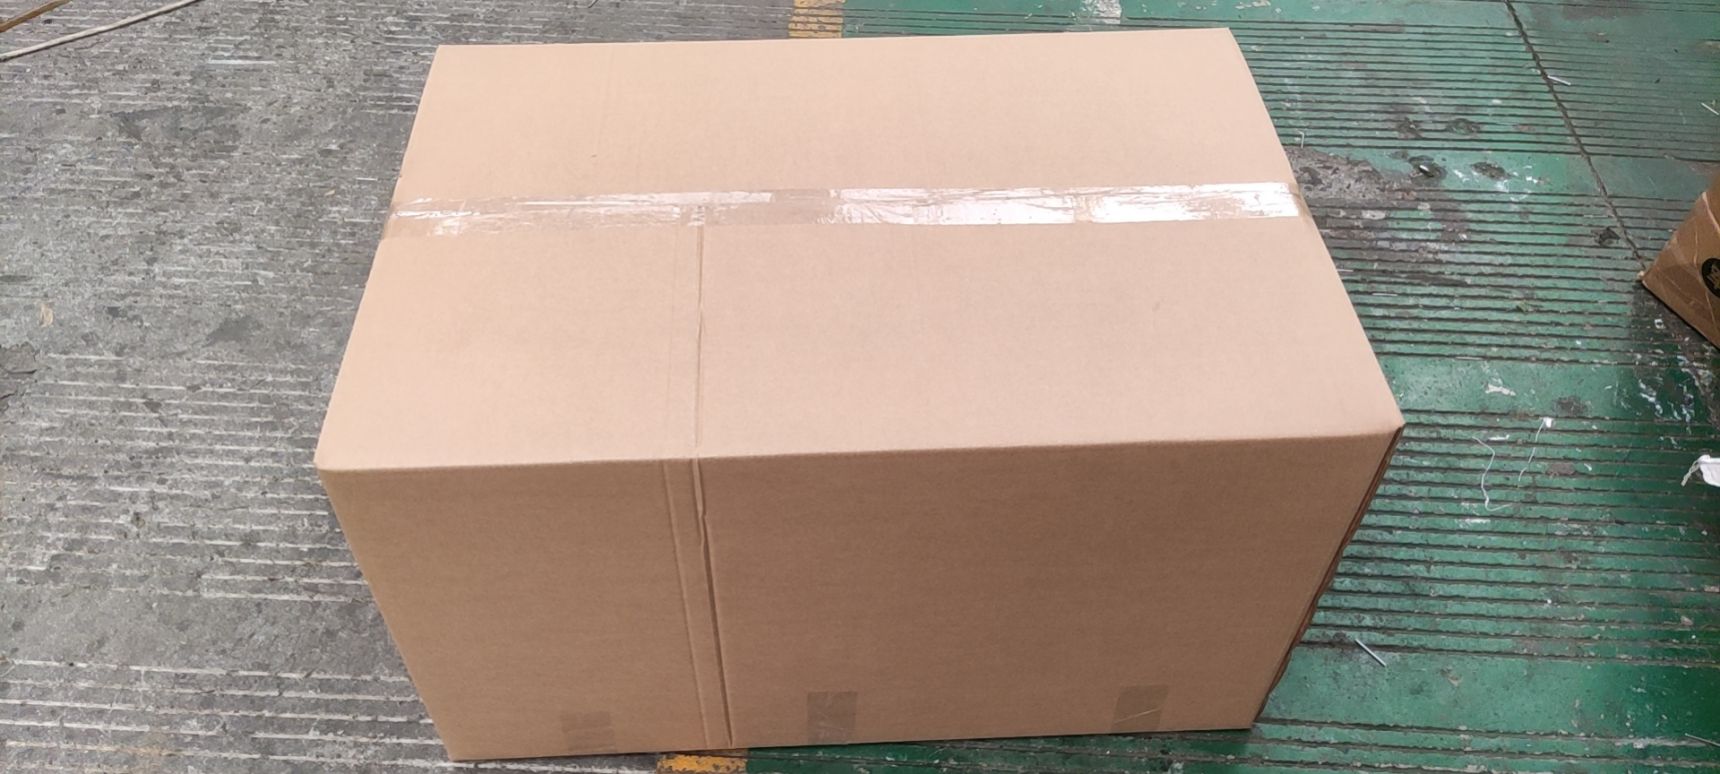 PE plastic multi-function box rotomolded carrying tool box plastic military standard hard case